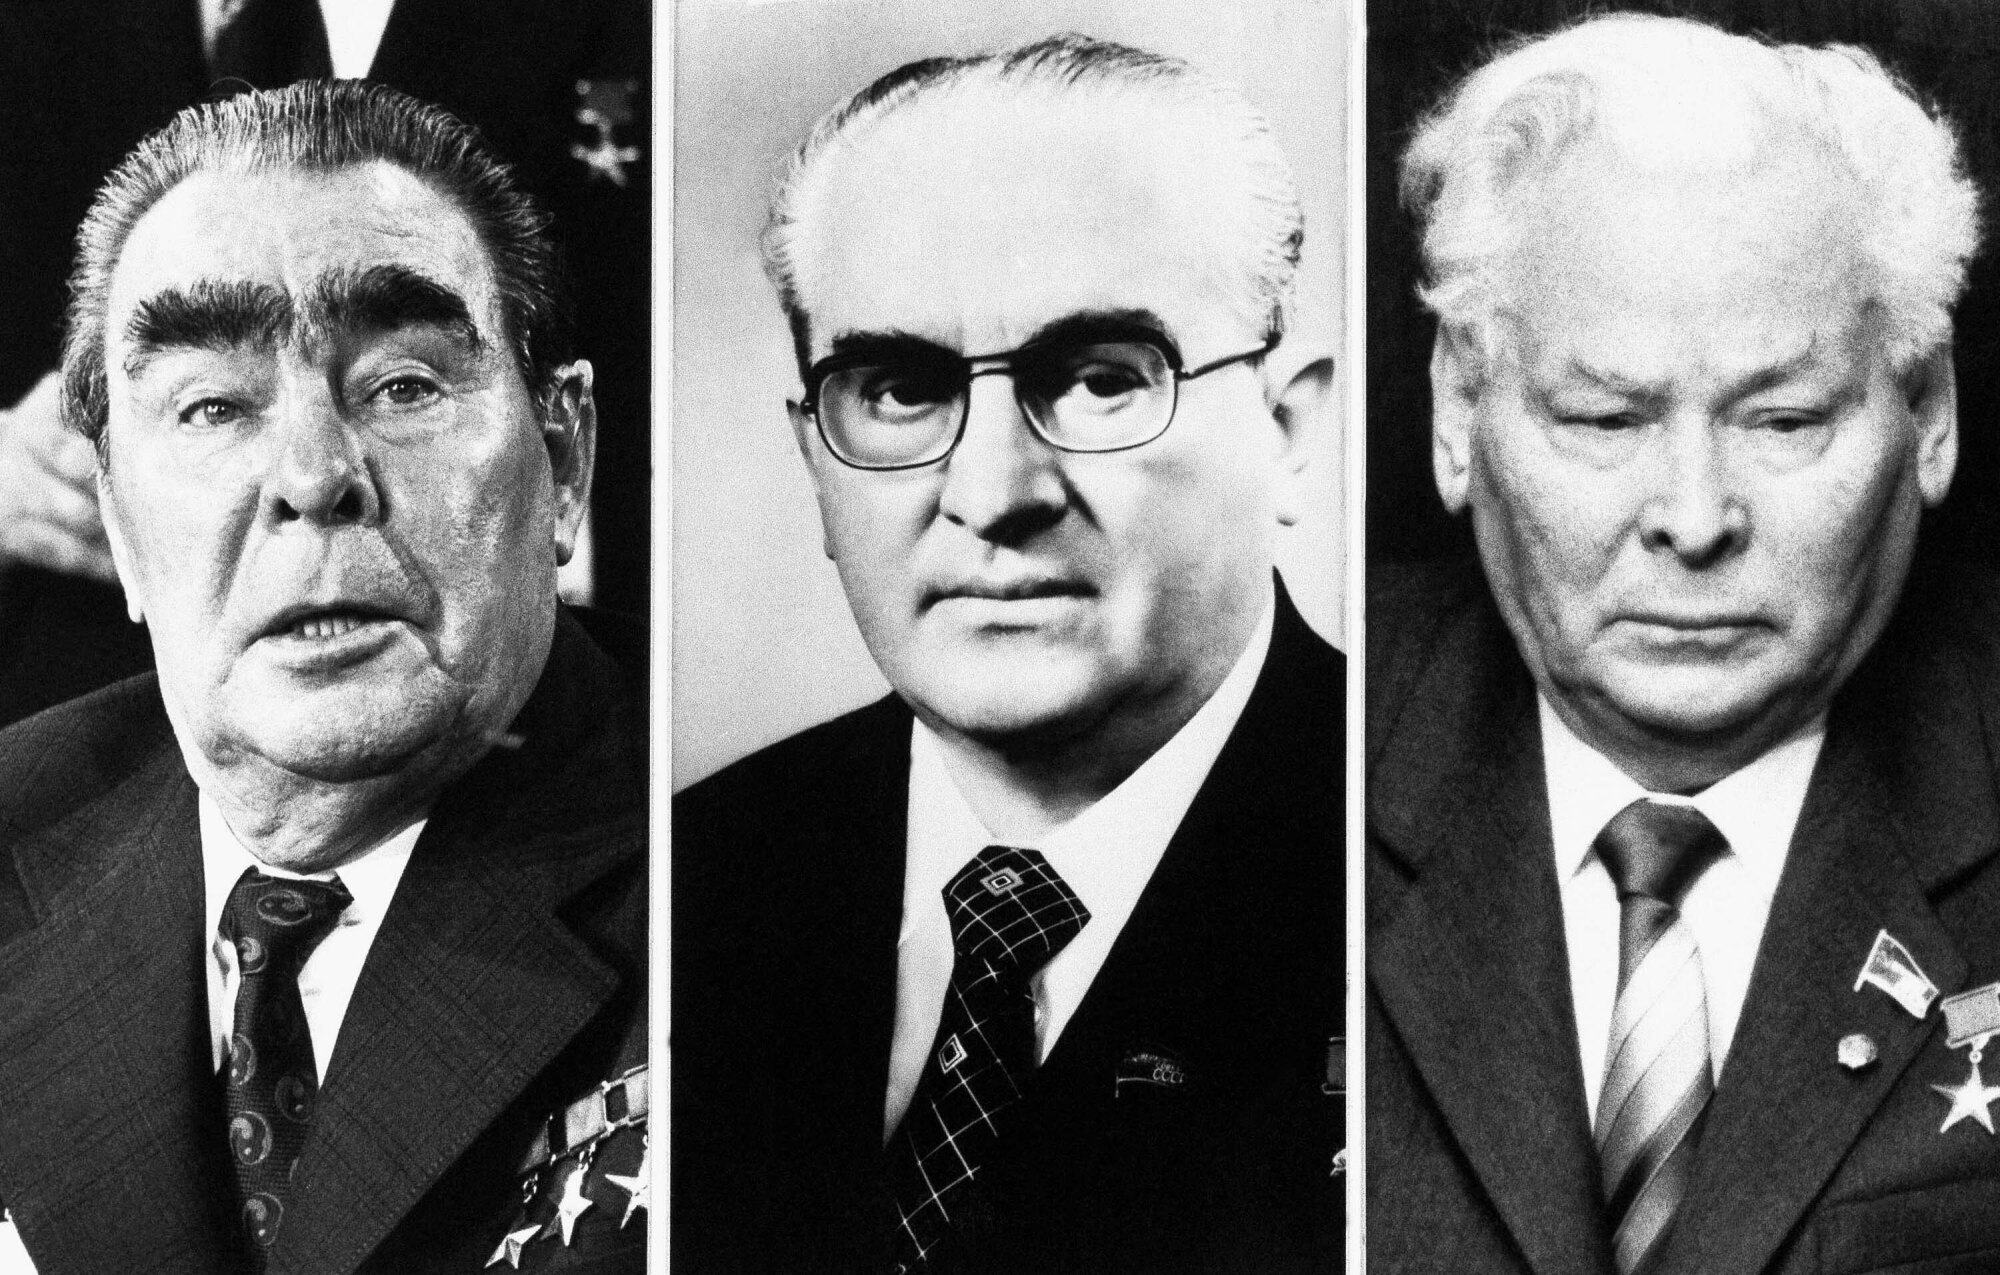 Three black and white images depict Soviet leaders Leonid Brezhnev, Yuri Andropov and Konstantin Chernenko.